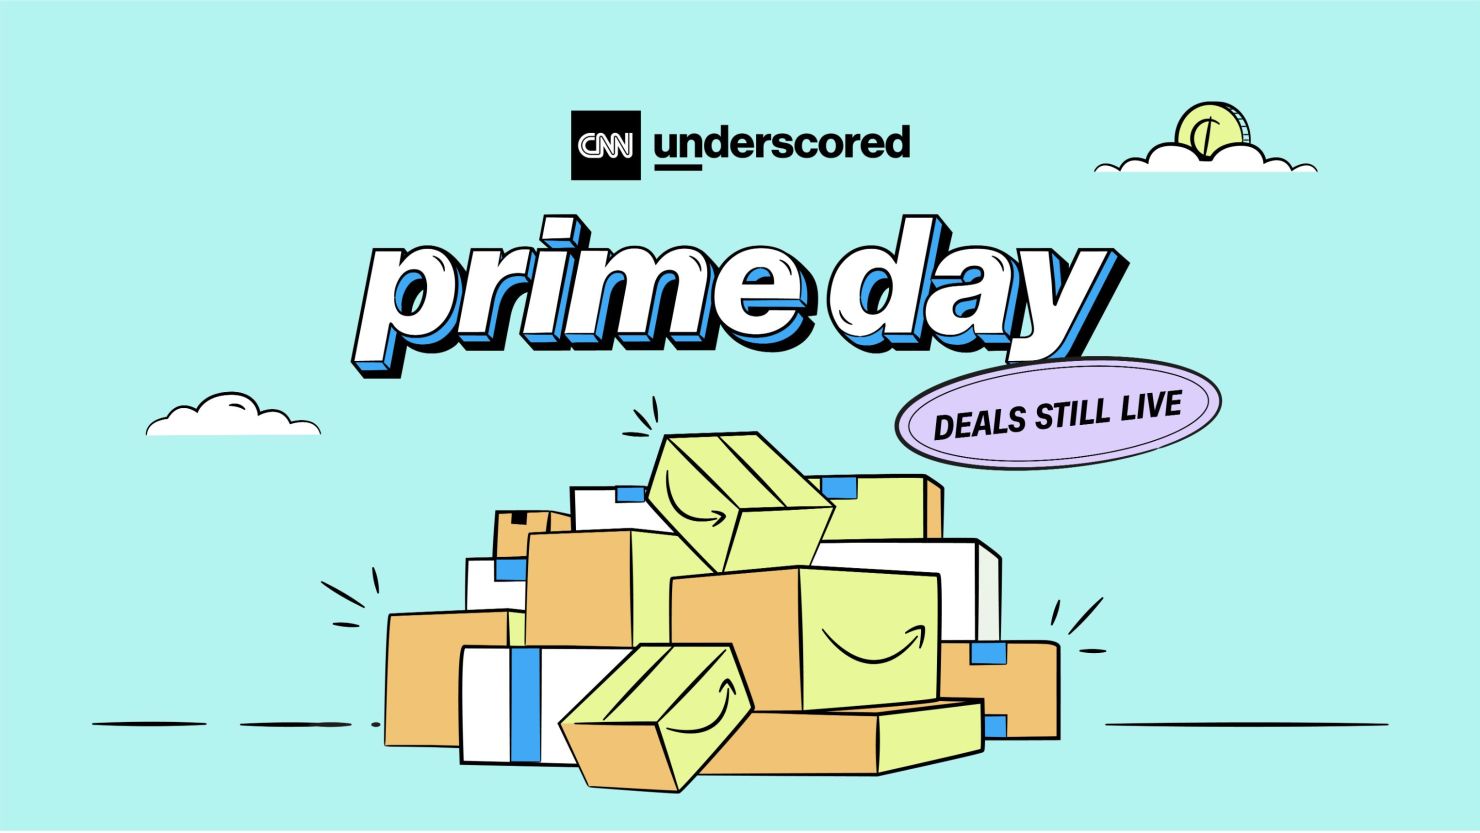 Prime Day -  Prime Day Deals + Tips! - Dear Creatives